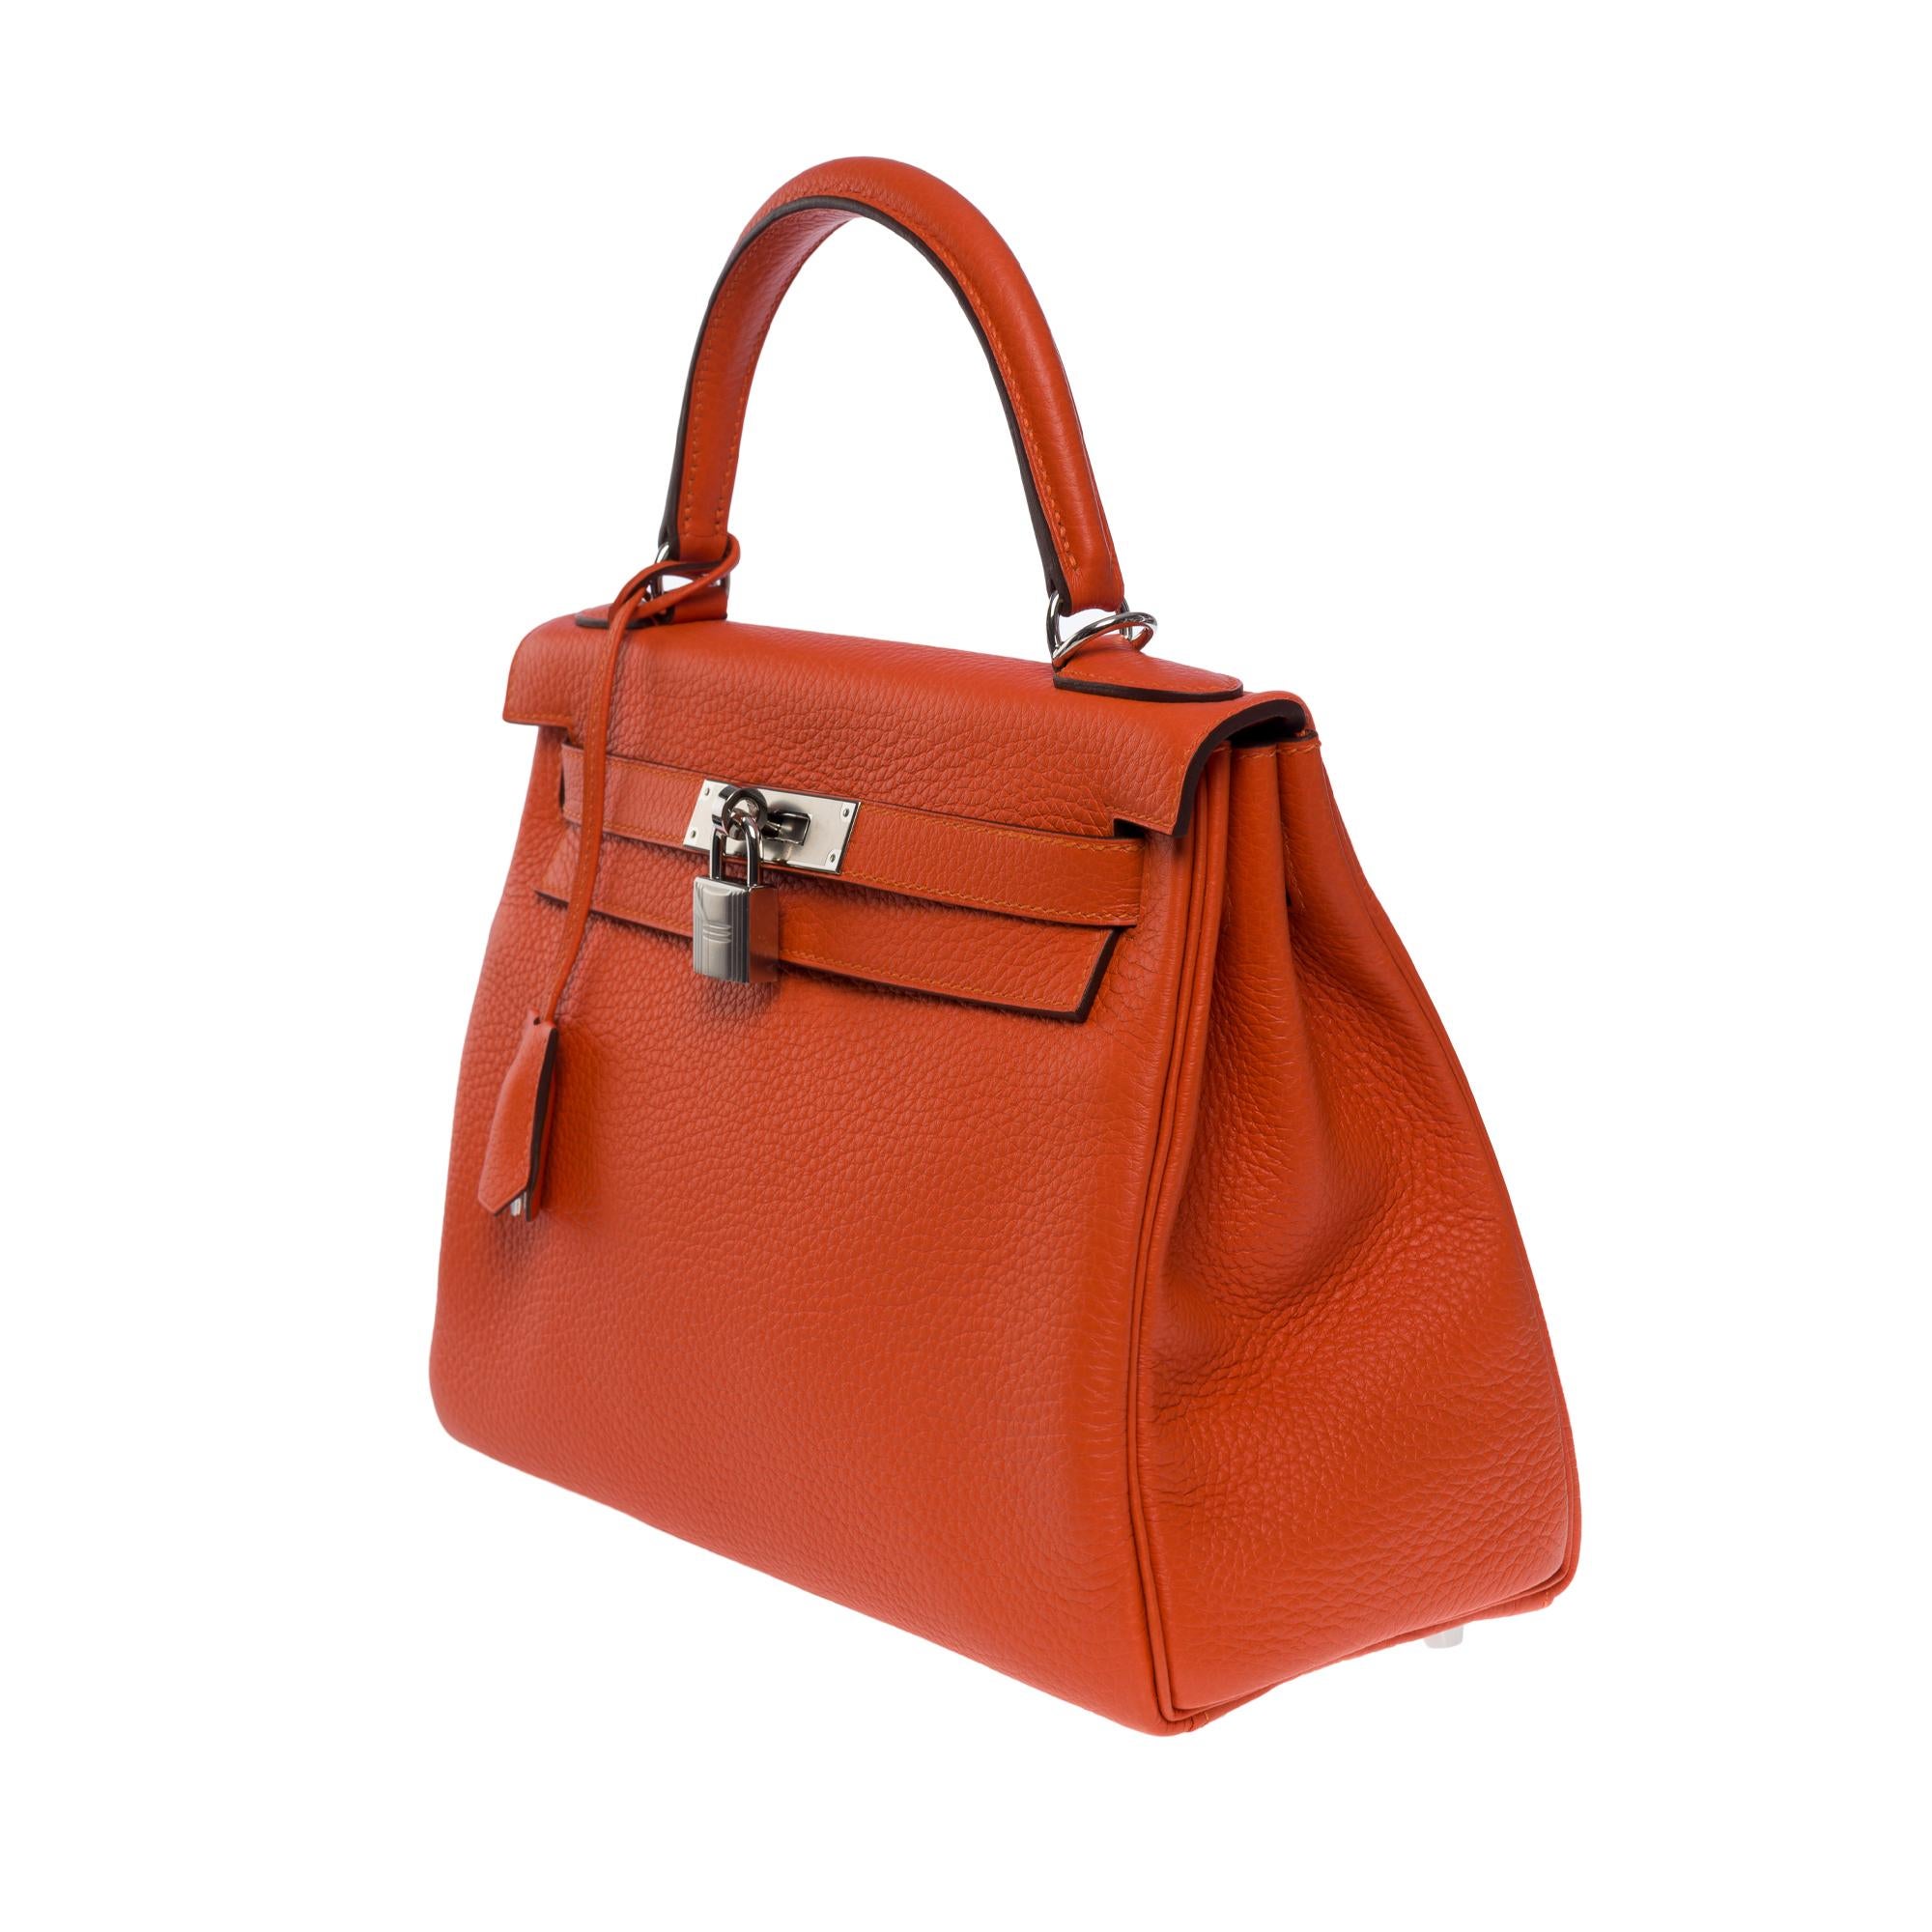 Women's New Amazing Hermes Kelly 28 retourne handbag strap in Orange Feu leather, SHW For Sale